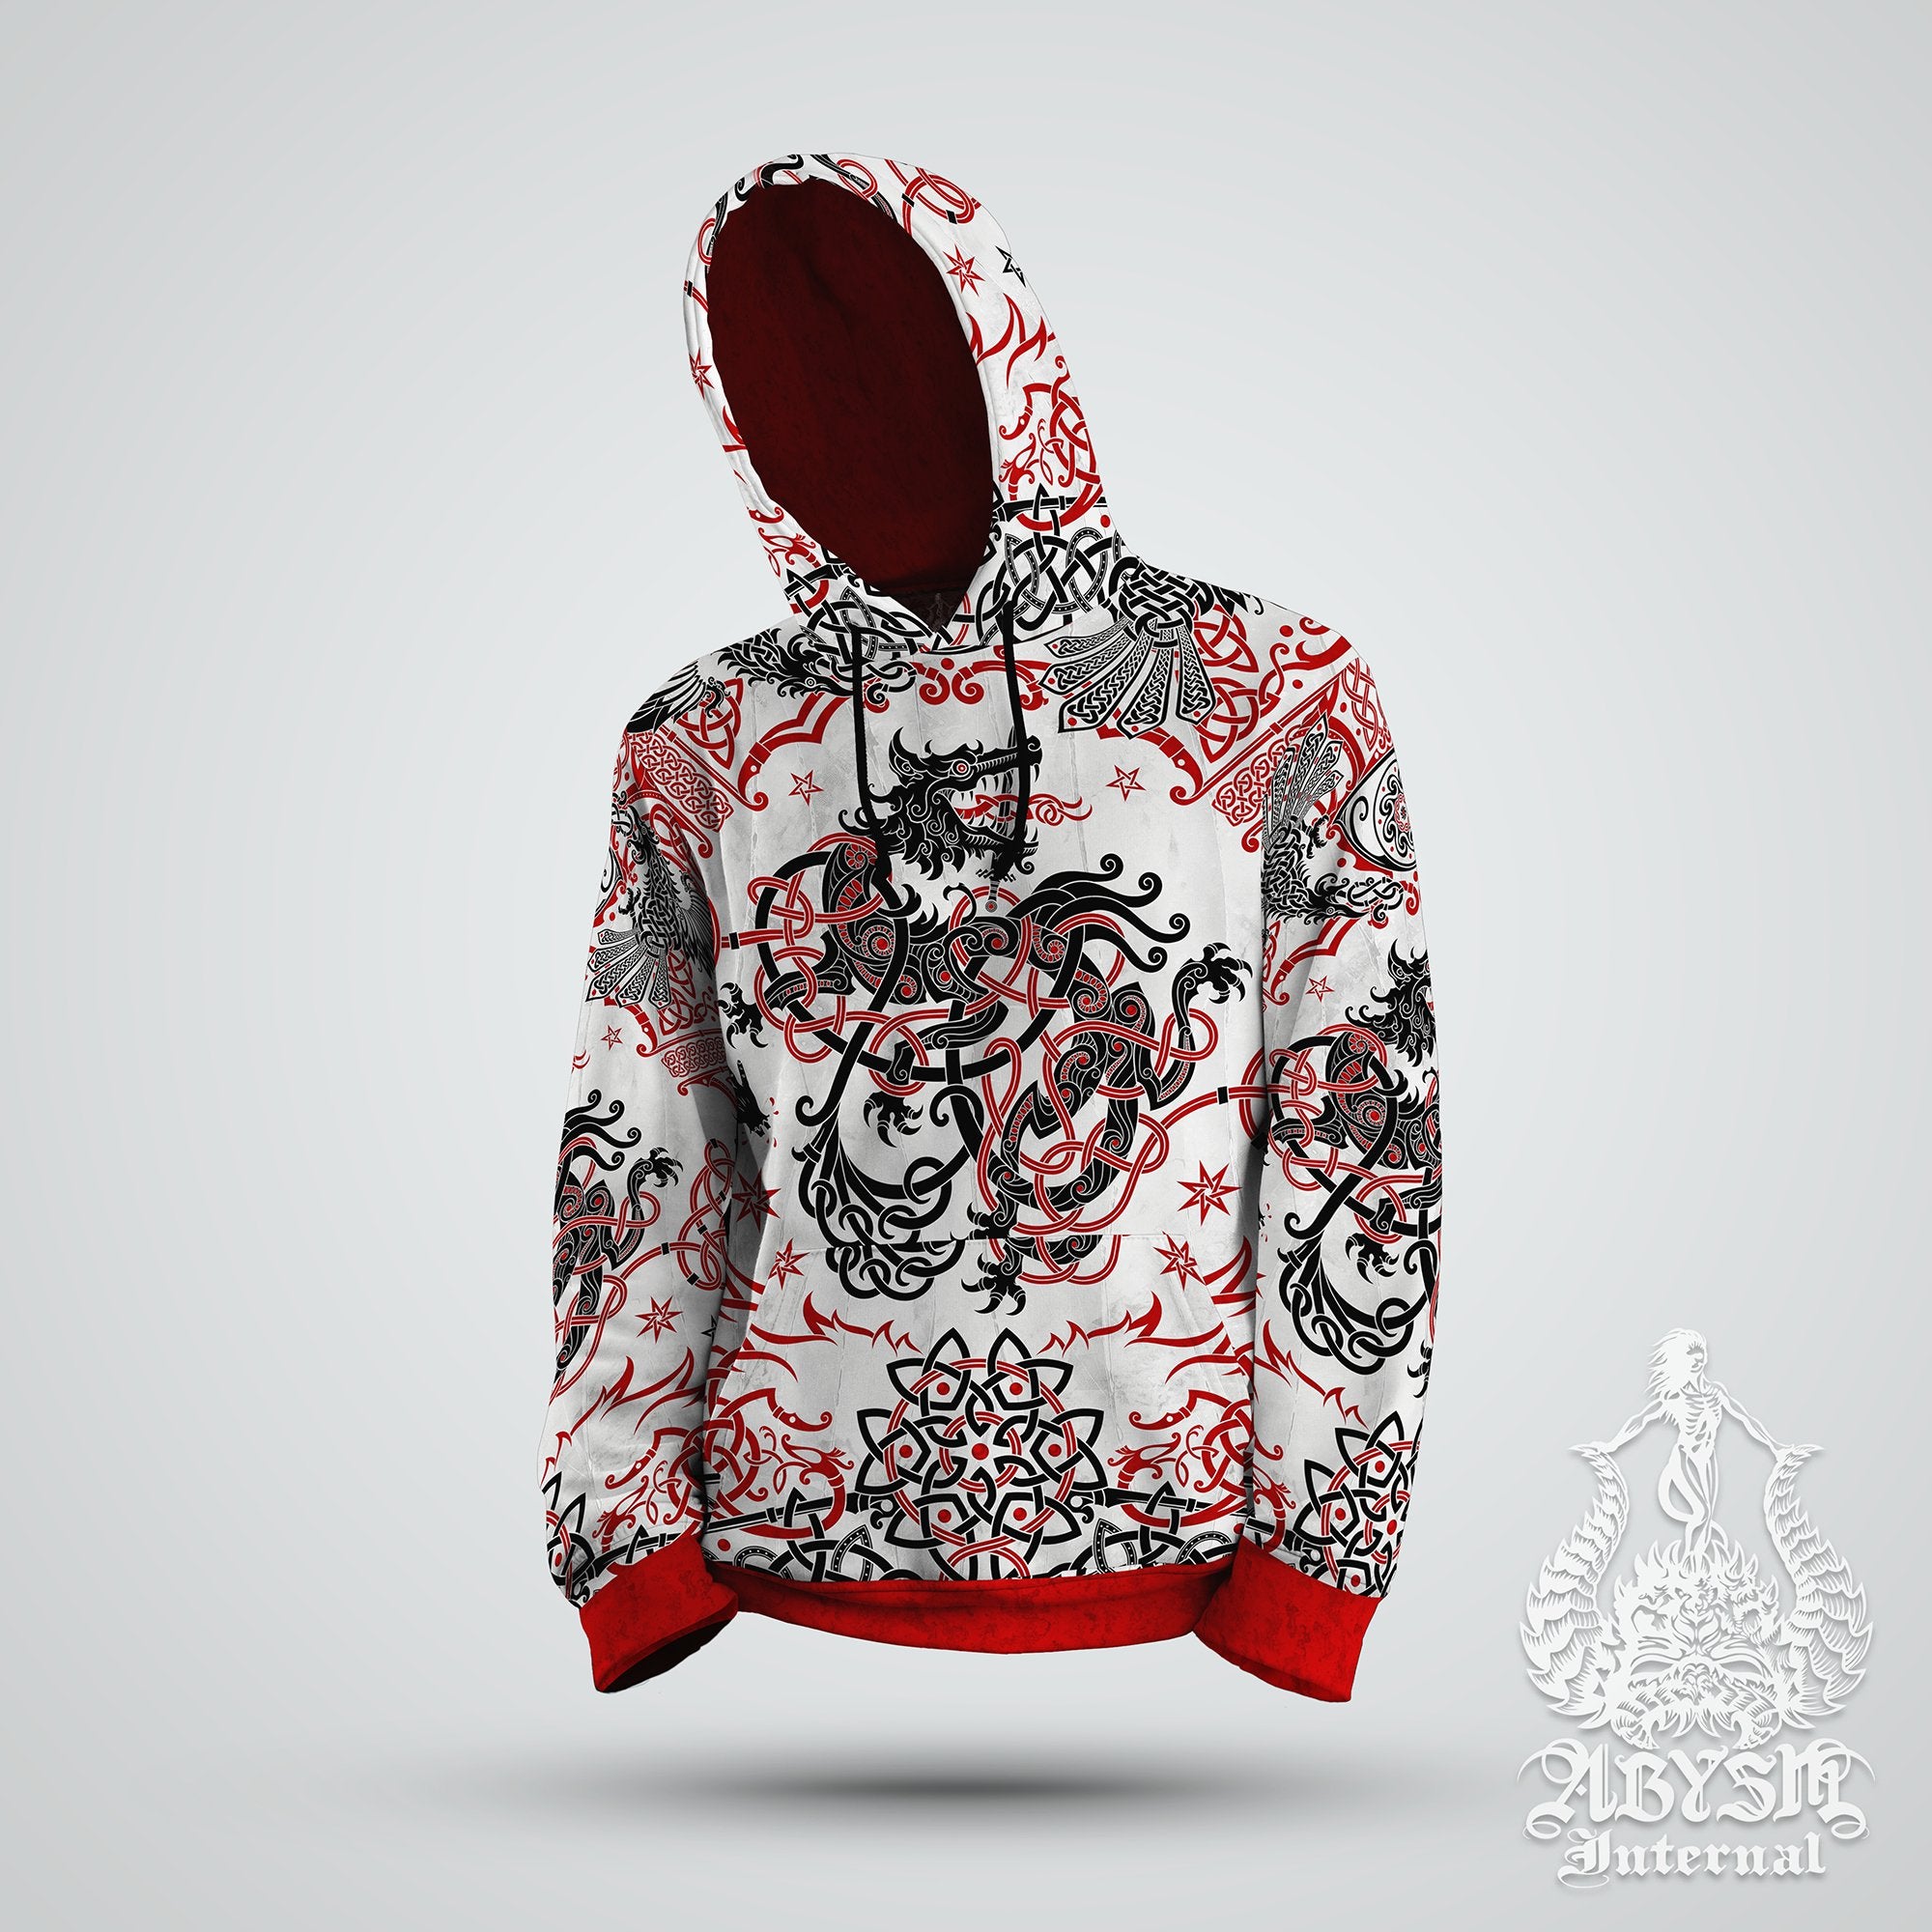 Nordic Wolf Hoodie, Norse Art Sweater, Fenrir Pullover, Viking Street Outfit, Knotwork Fenrir Streetwear, Alternative Clothing, Unisex - White Red Black - Abysm Internal